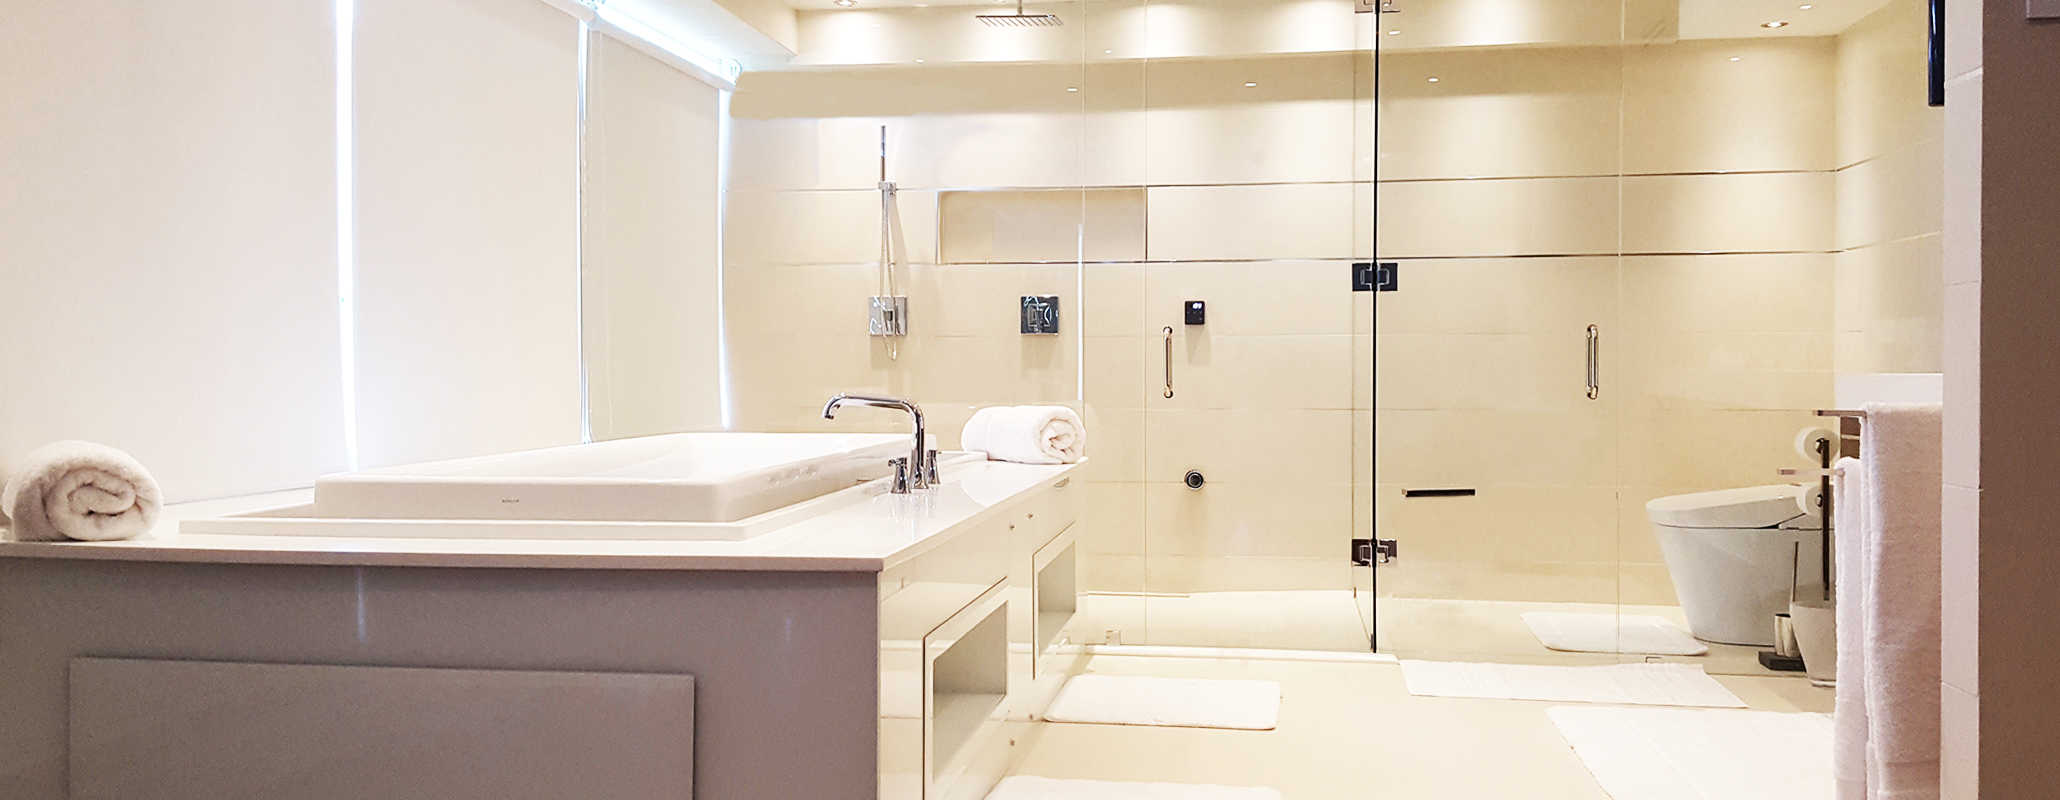 Shower glass hardware by Aldora, walk-in shower, soaker tub, ceramic tile, luxurious master bathroom, glass shower wall by Aldora